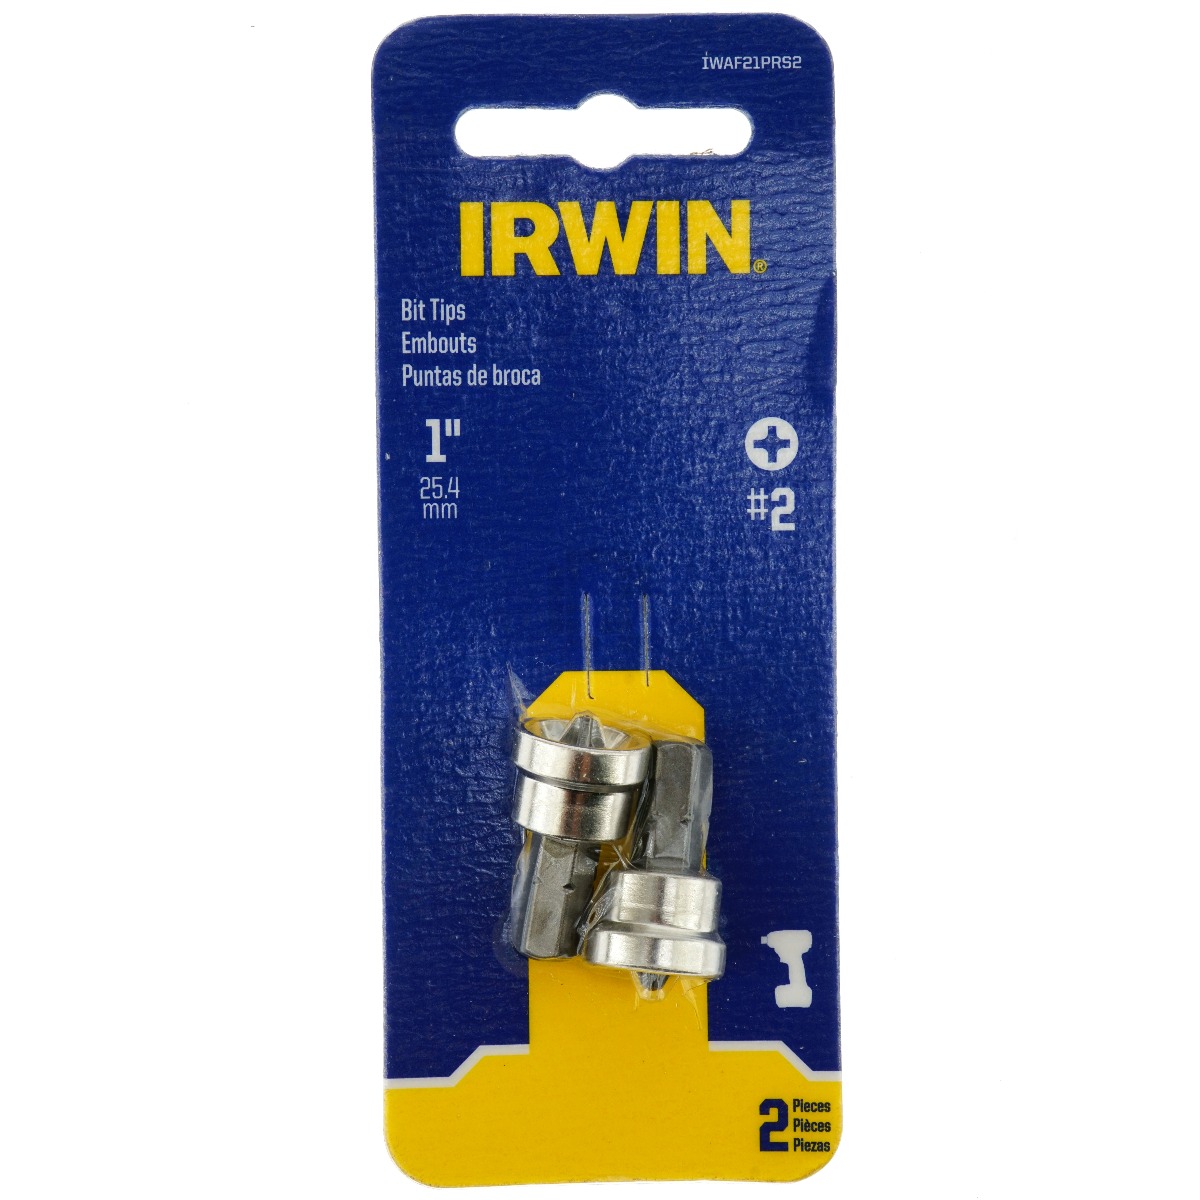 Irwin IWAF21PRS2 1" Drywall Screw Setter Bit Tips, #2 Phillips